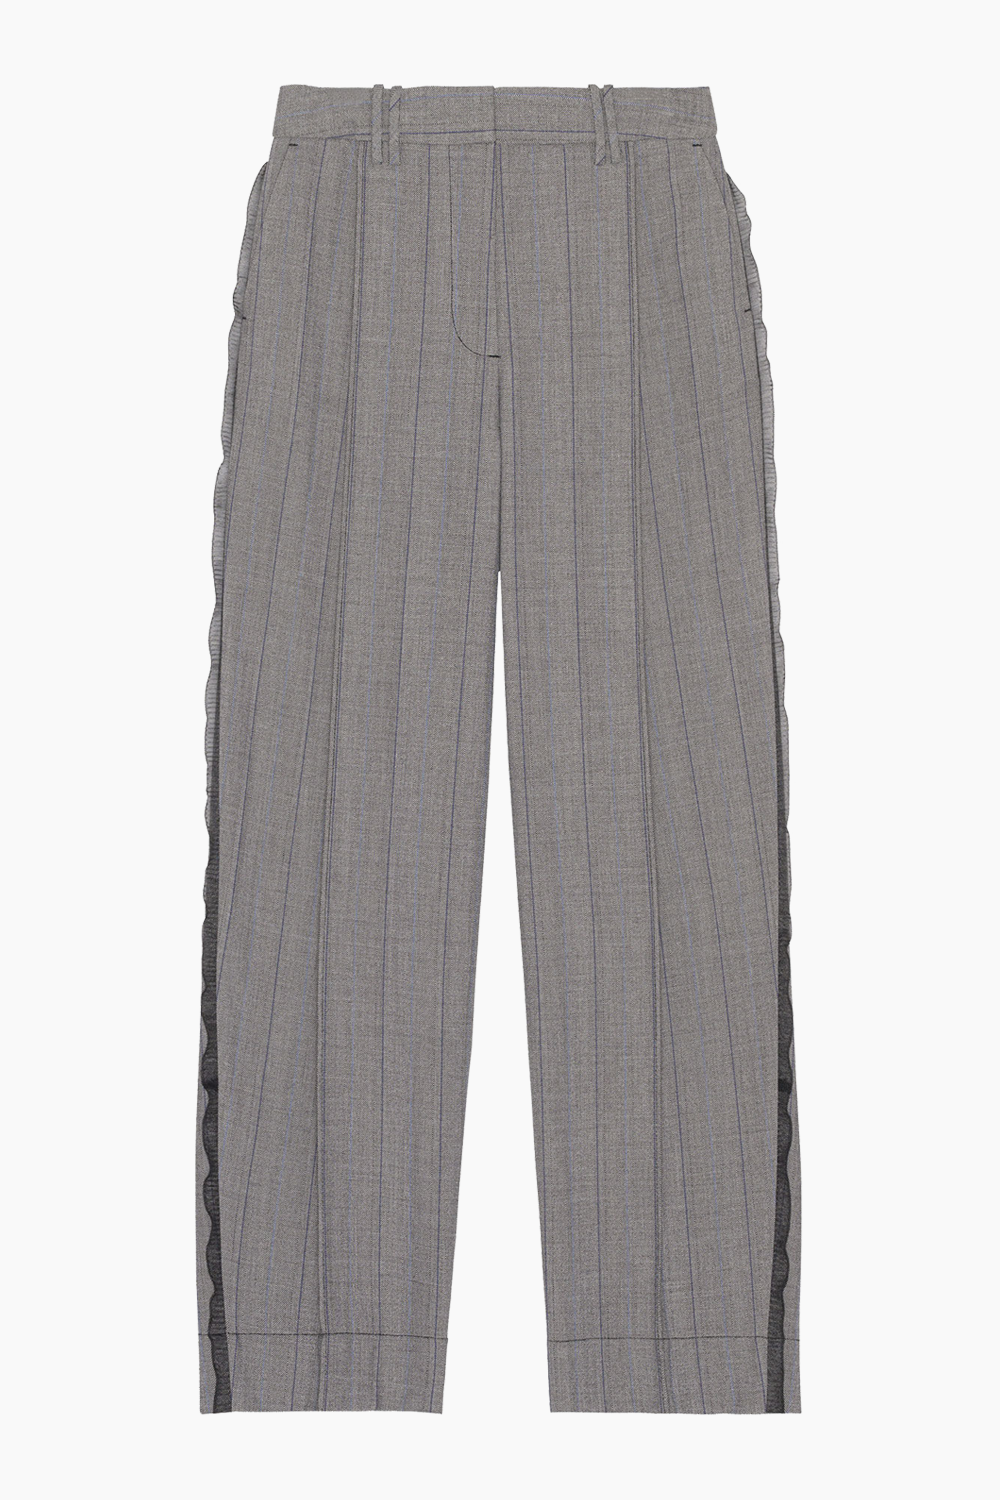 Se Herringbone Suiting Relaxed Pleated Pants F8214 - Frost Grey - GANNI - Grå M hos QNTS.dk